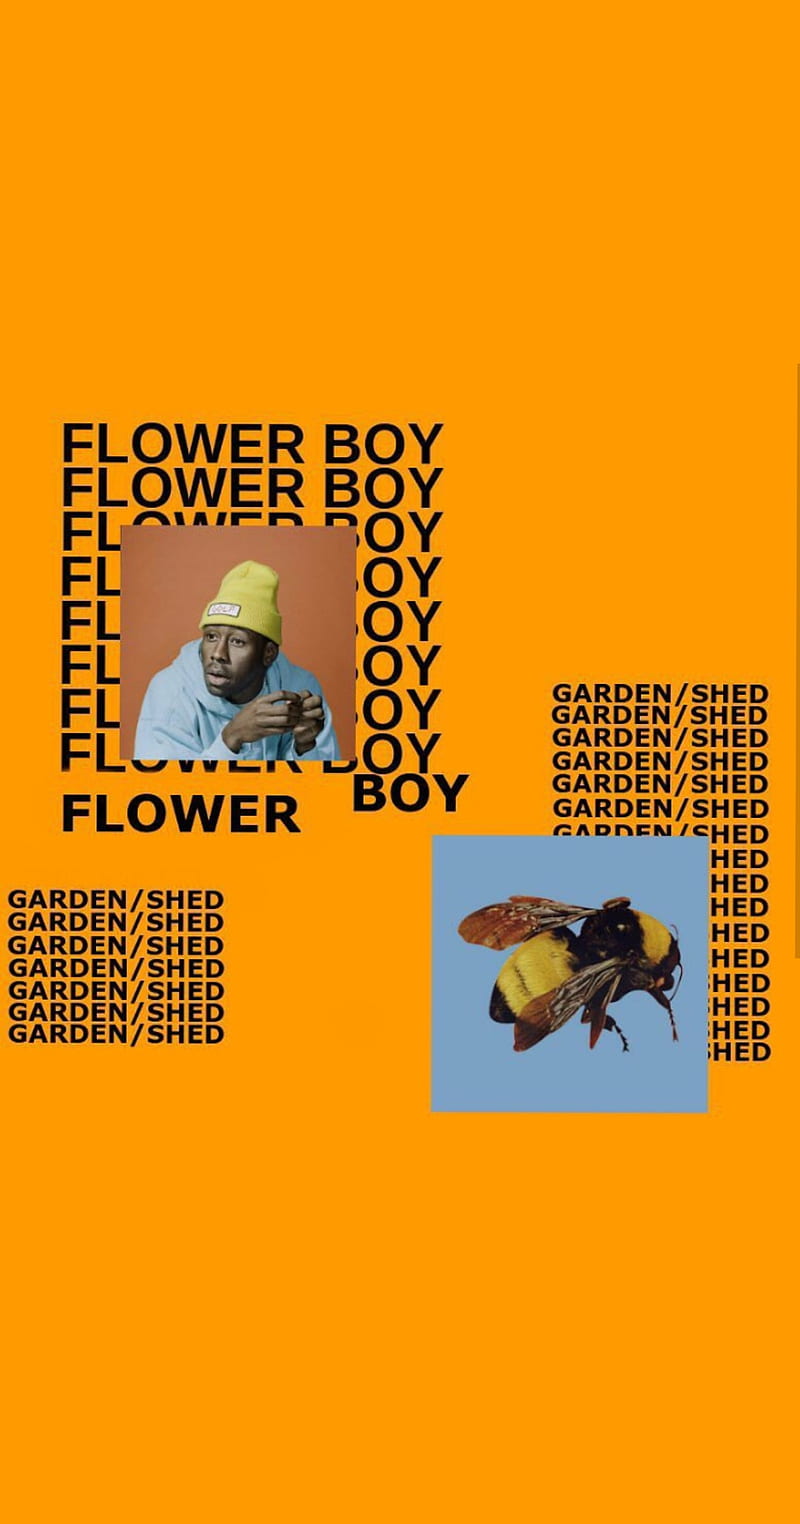 Flower Boy Garden Shed Tyler The